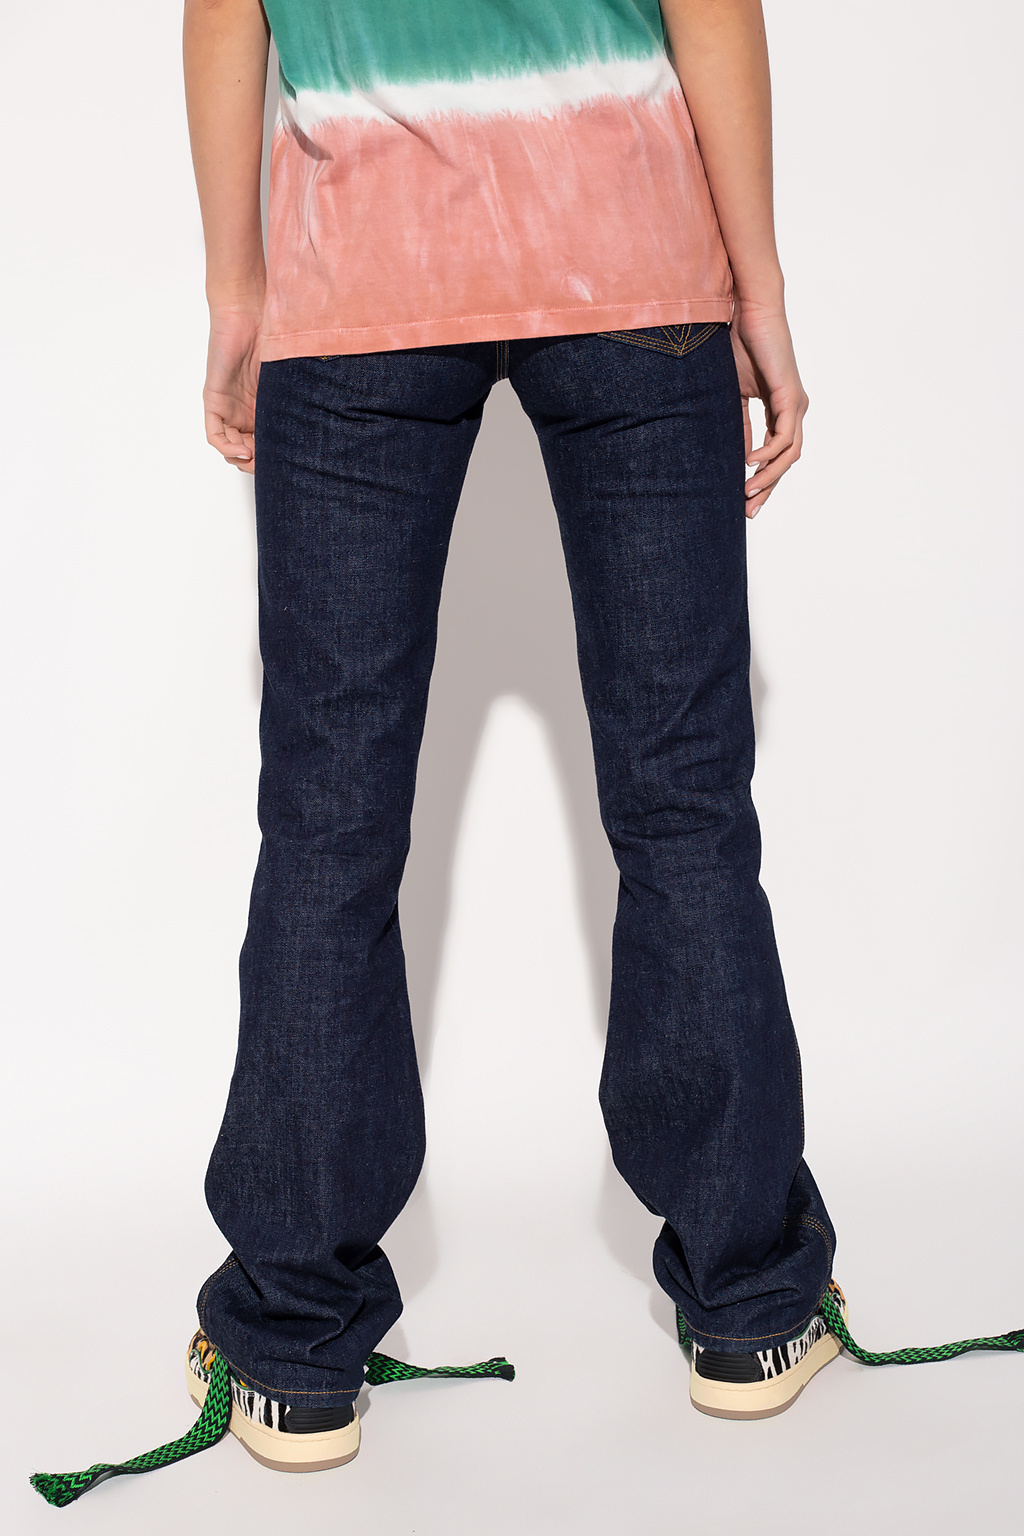 bottega leg Veneta Flared jeans